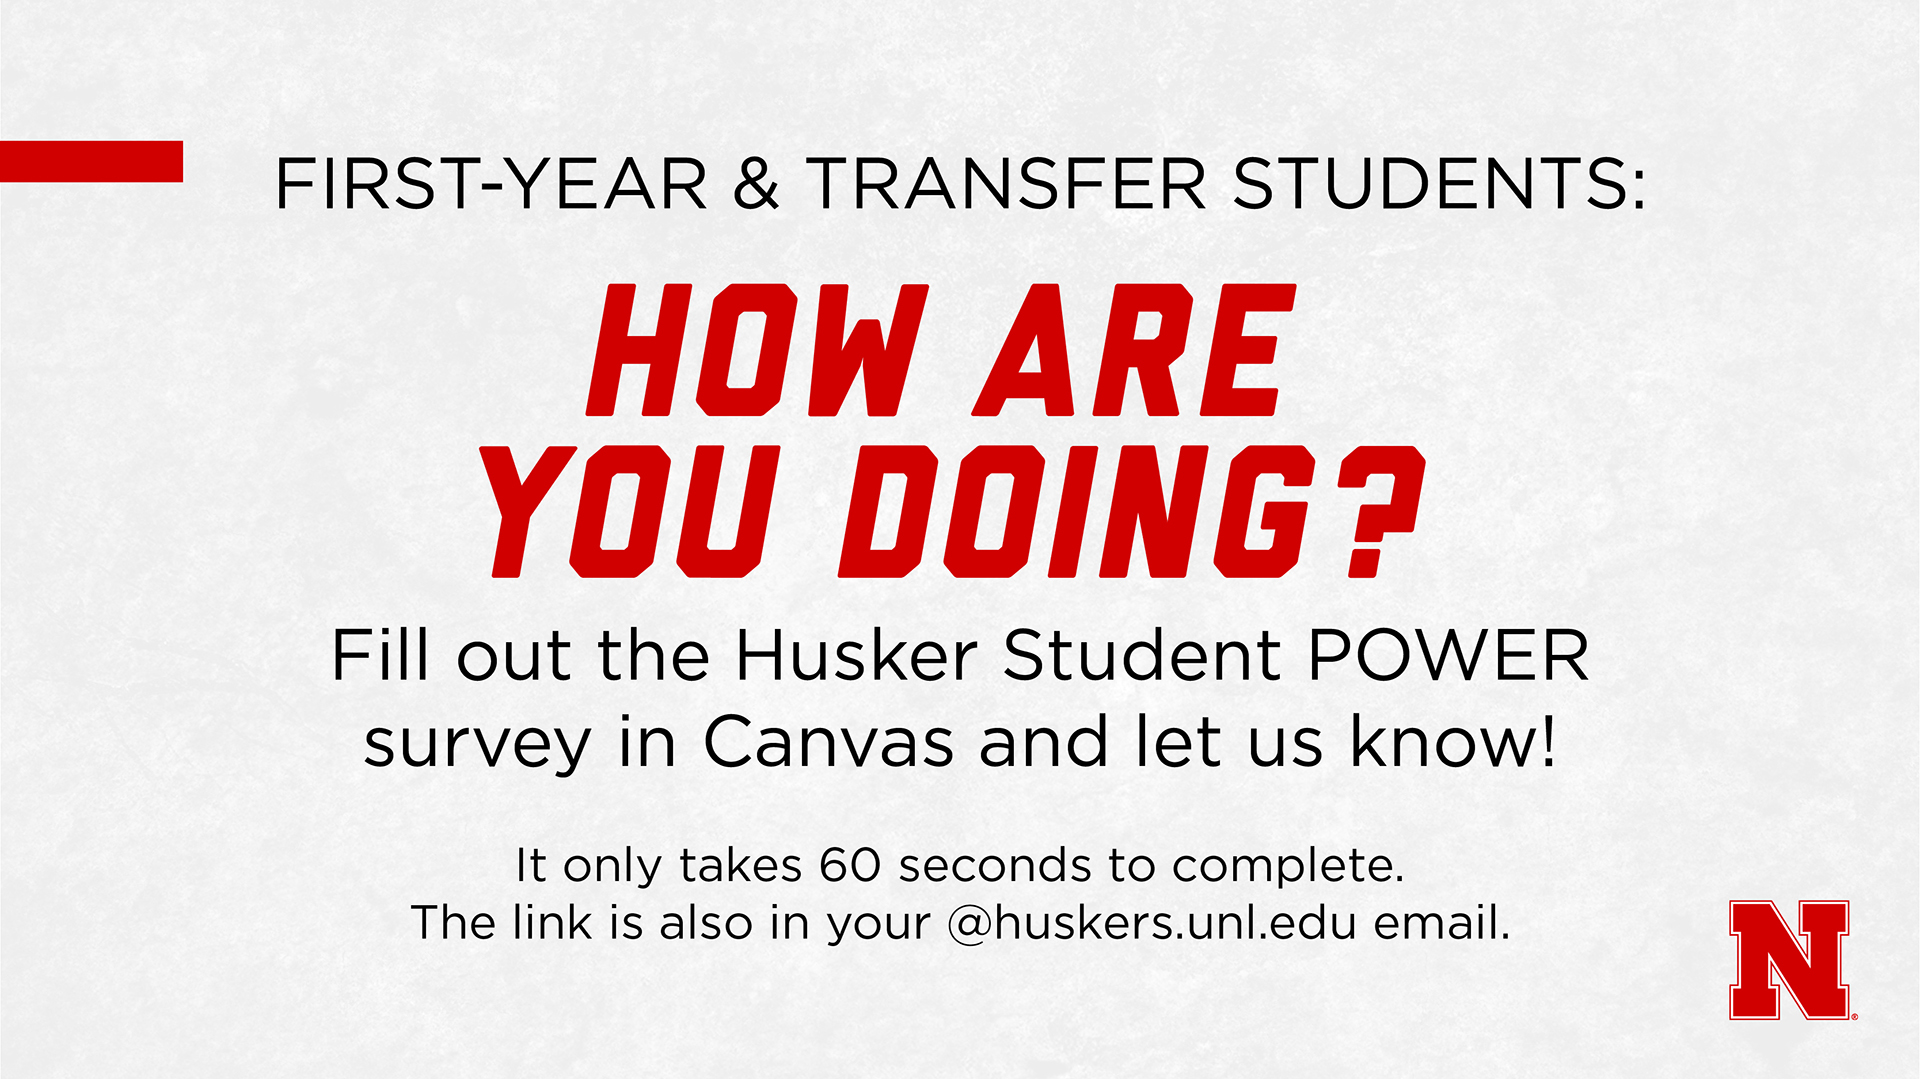 Husker Student POWER survey will be sent to scholars on September 13.